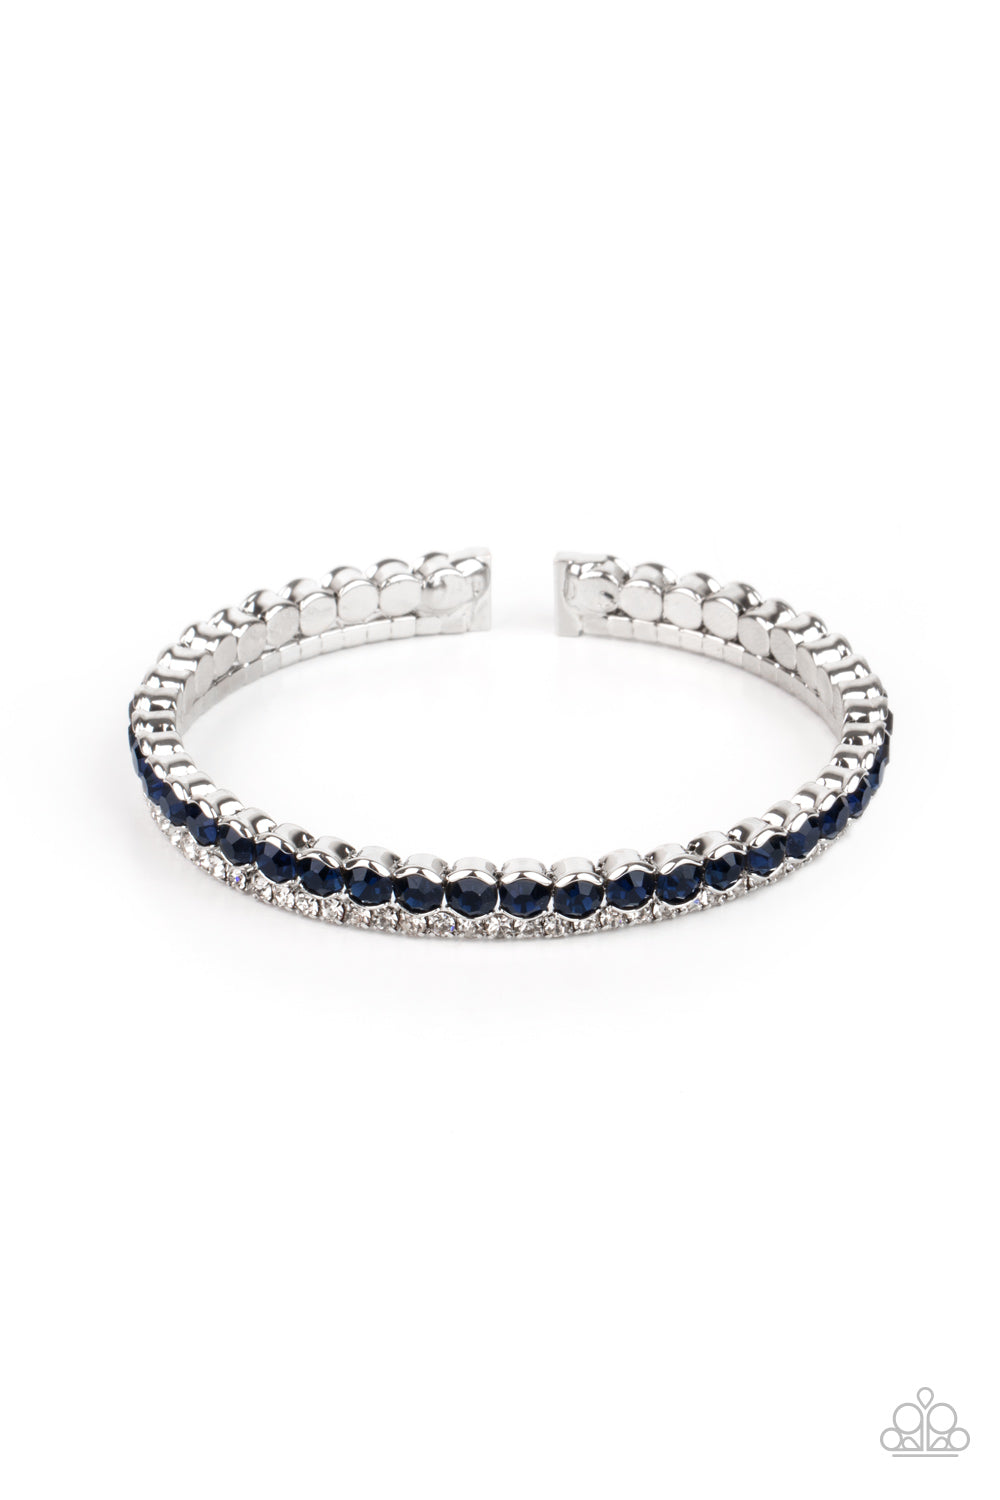 Paparazzi Fairytale Sparkle - Blue Bracelet - A Finishing Touch Jewelry